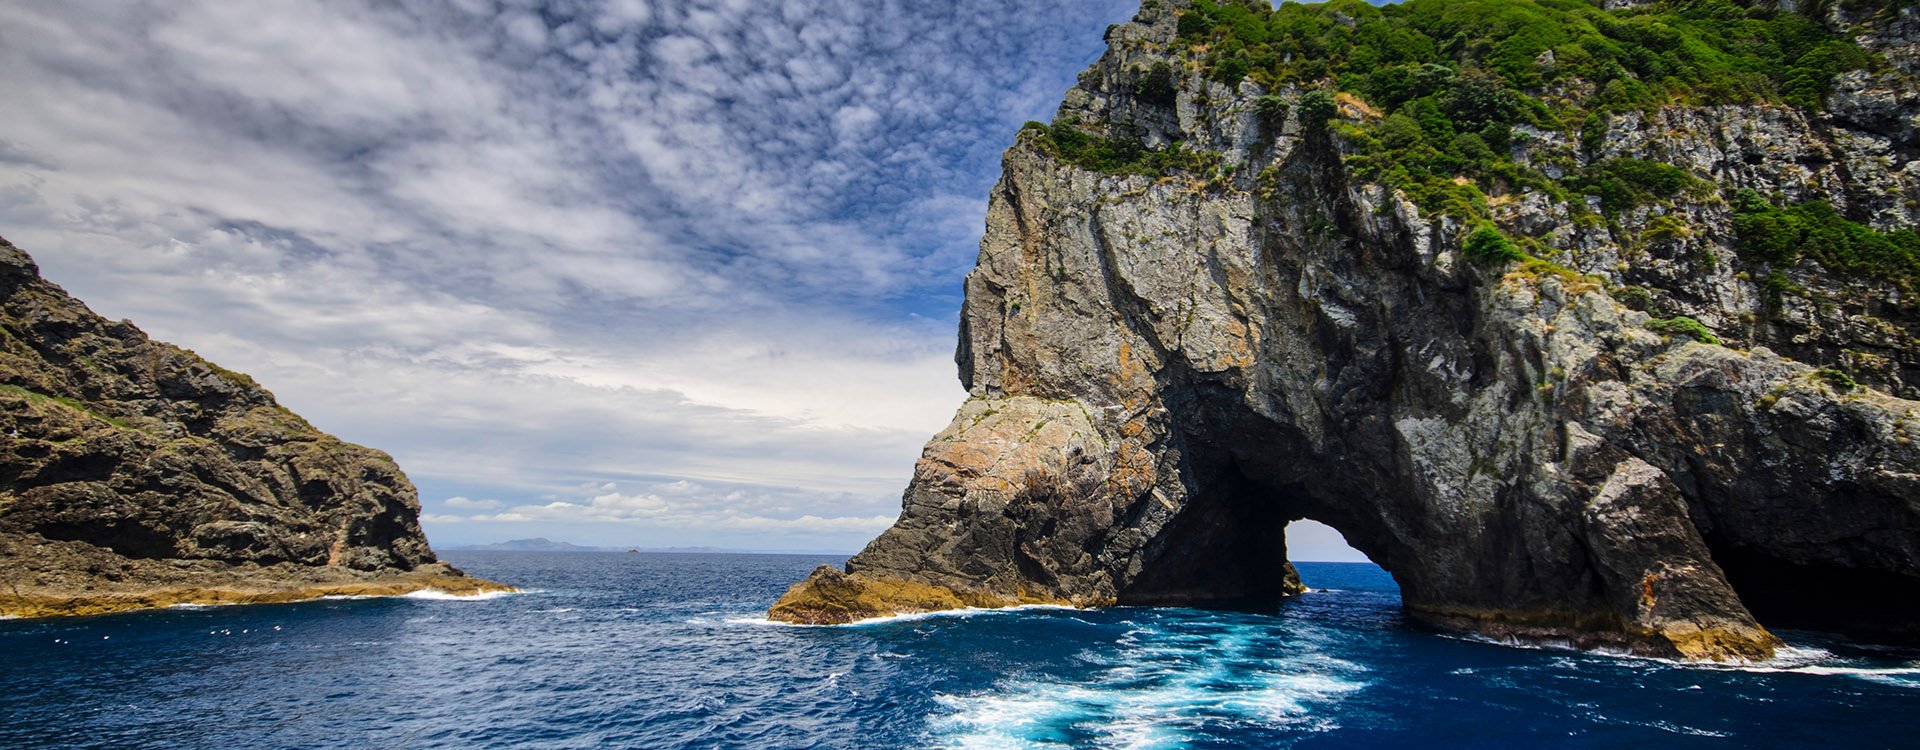 hole in rock, bay of islands, New Zealand